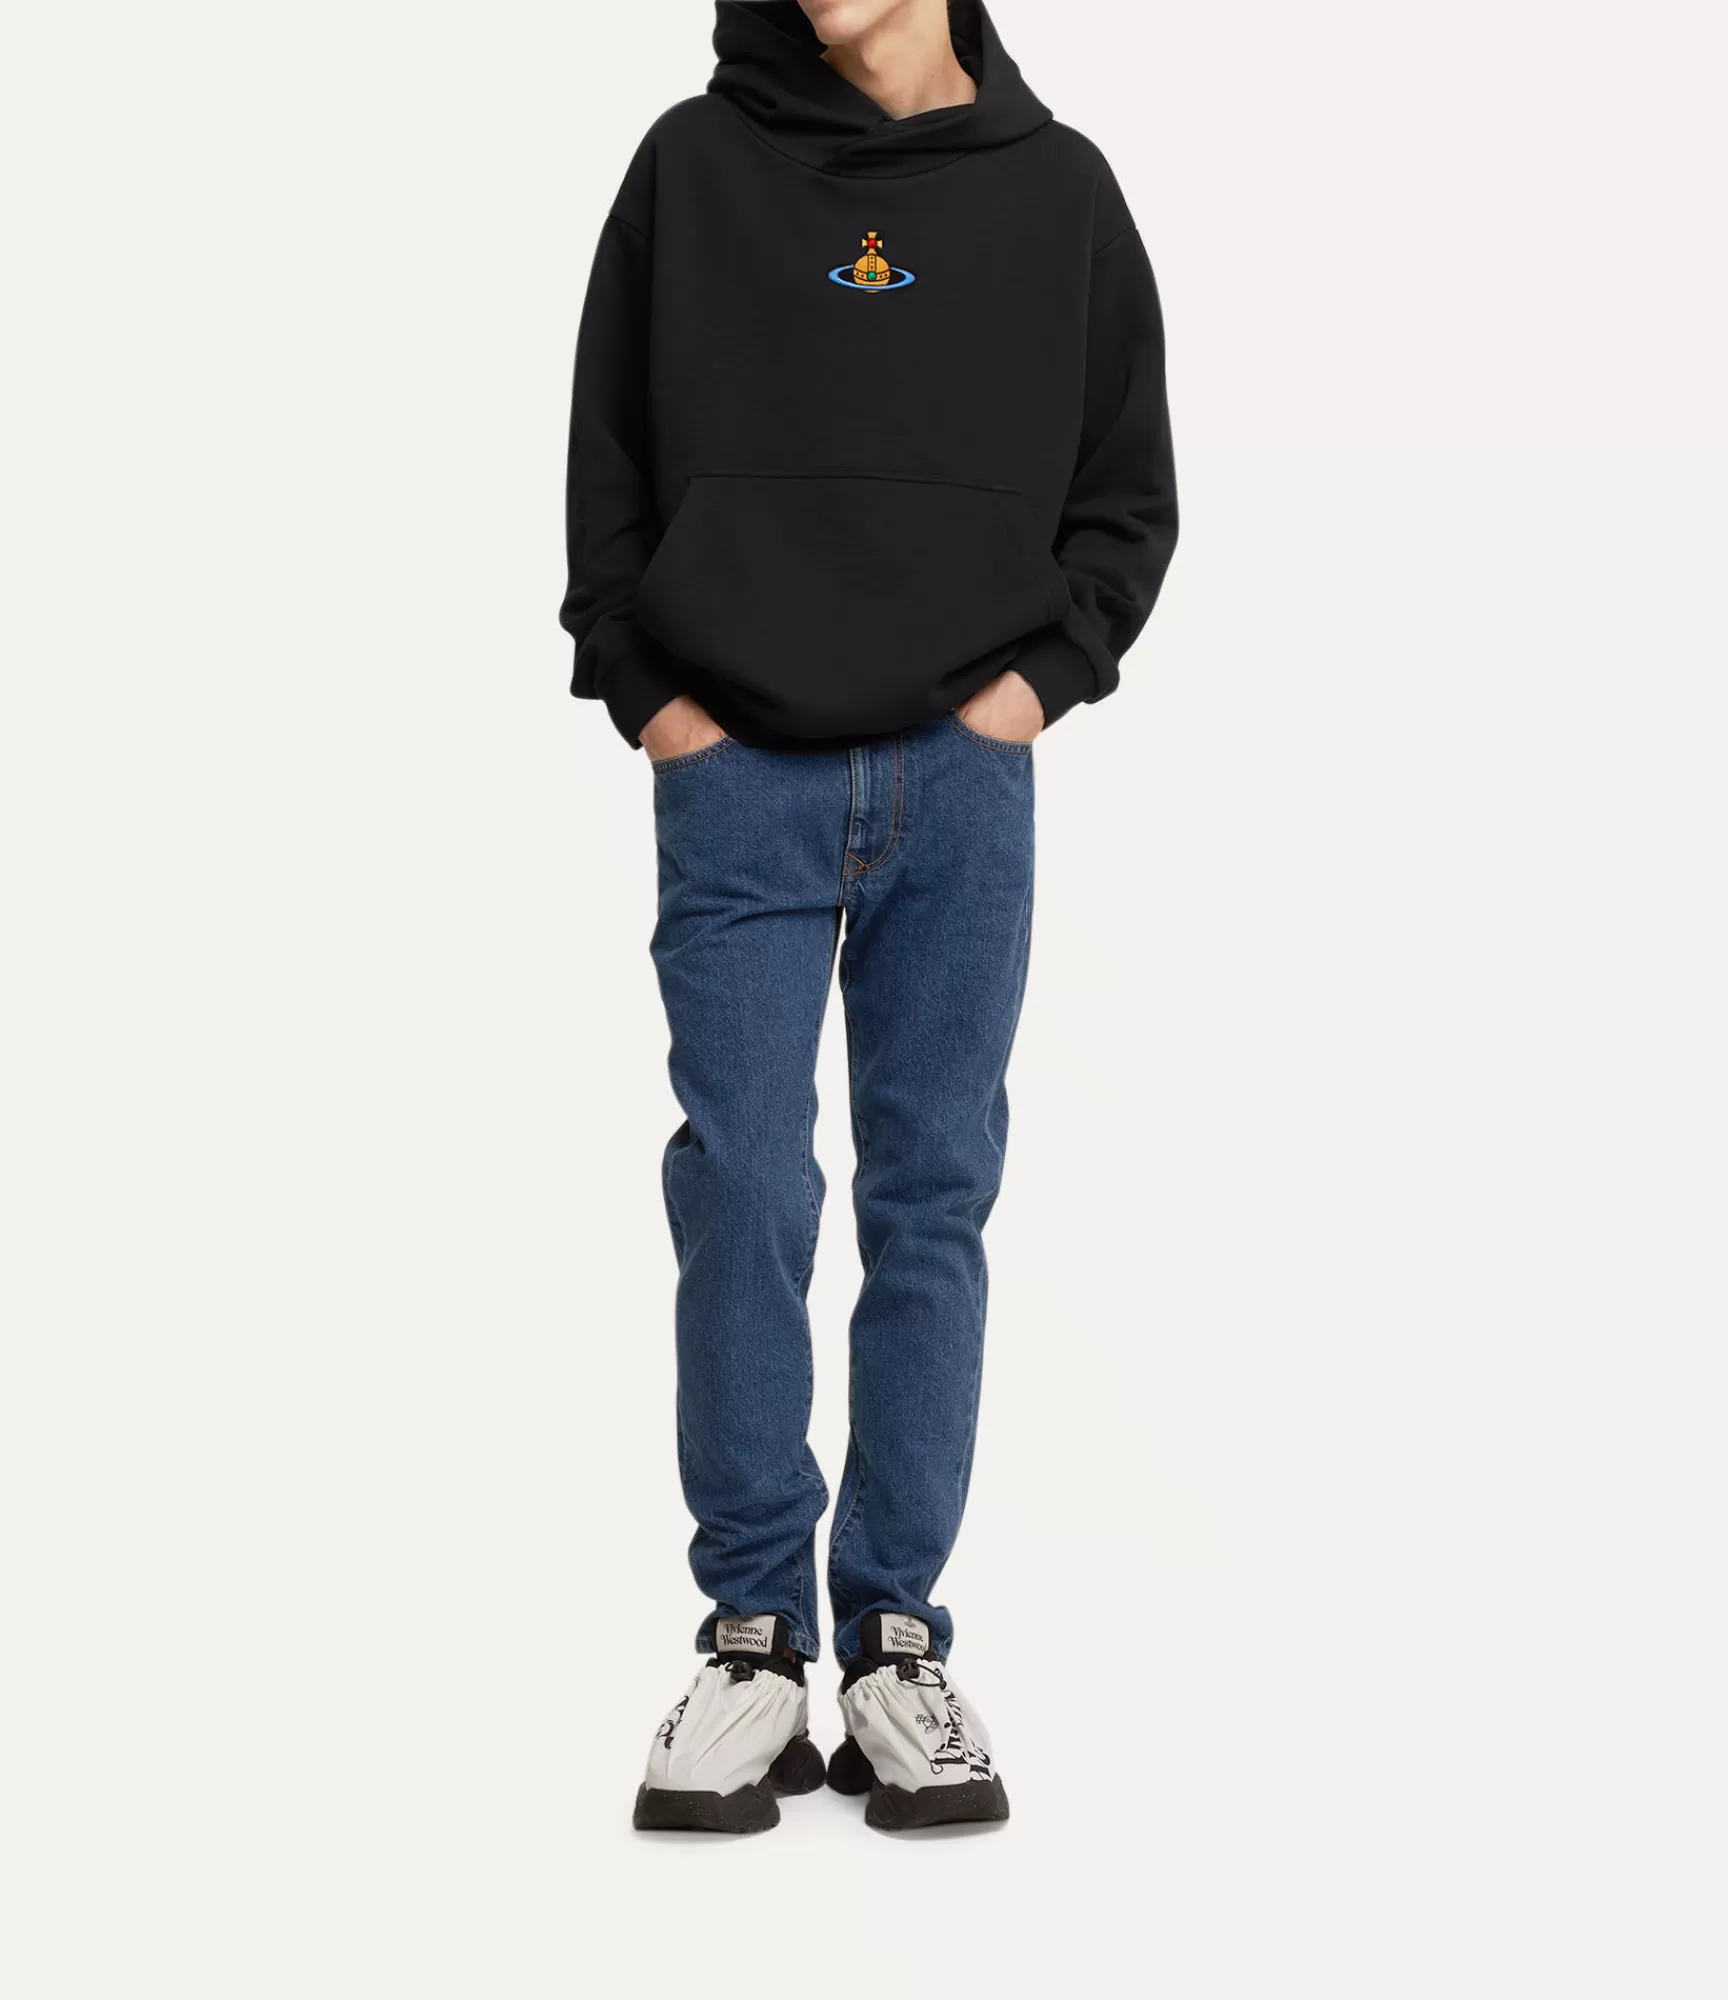 Vivienne Westwood Knitwear and Sweatshirts | Sweatshirts and T-Shirts*Pullover sweatshirt Black